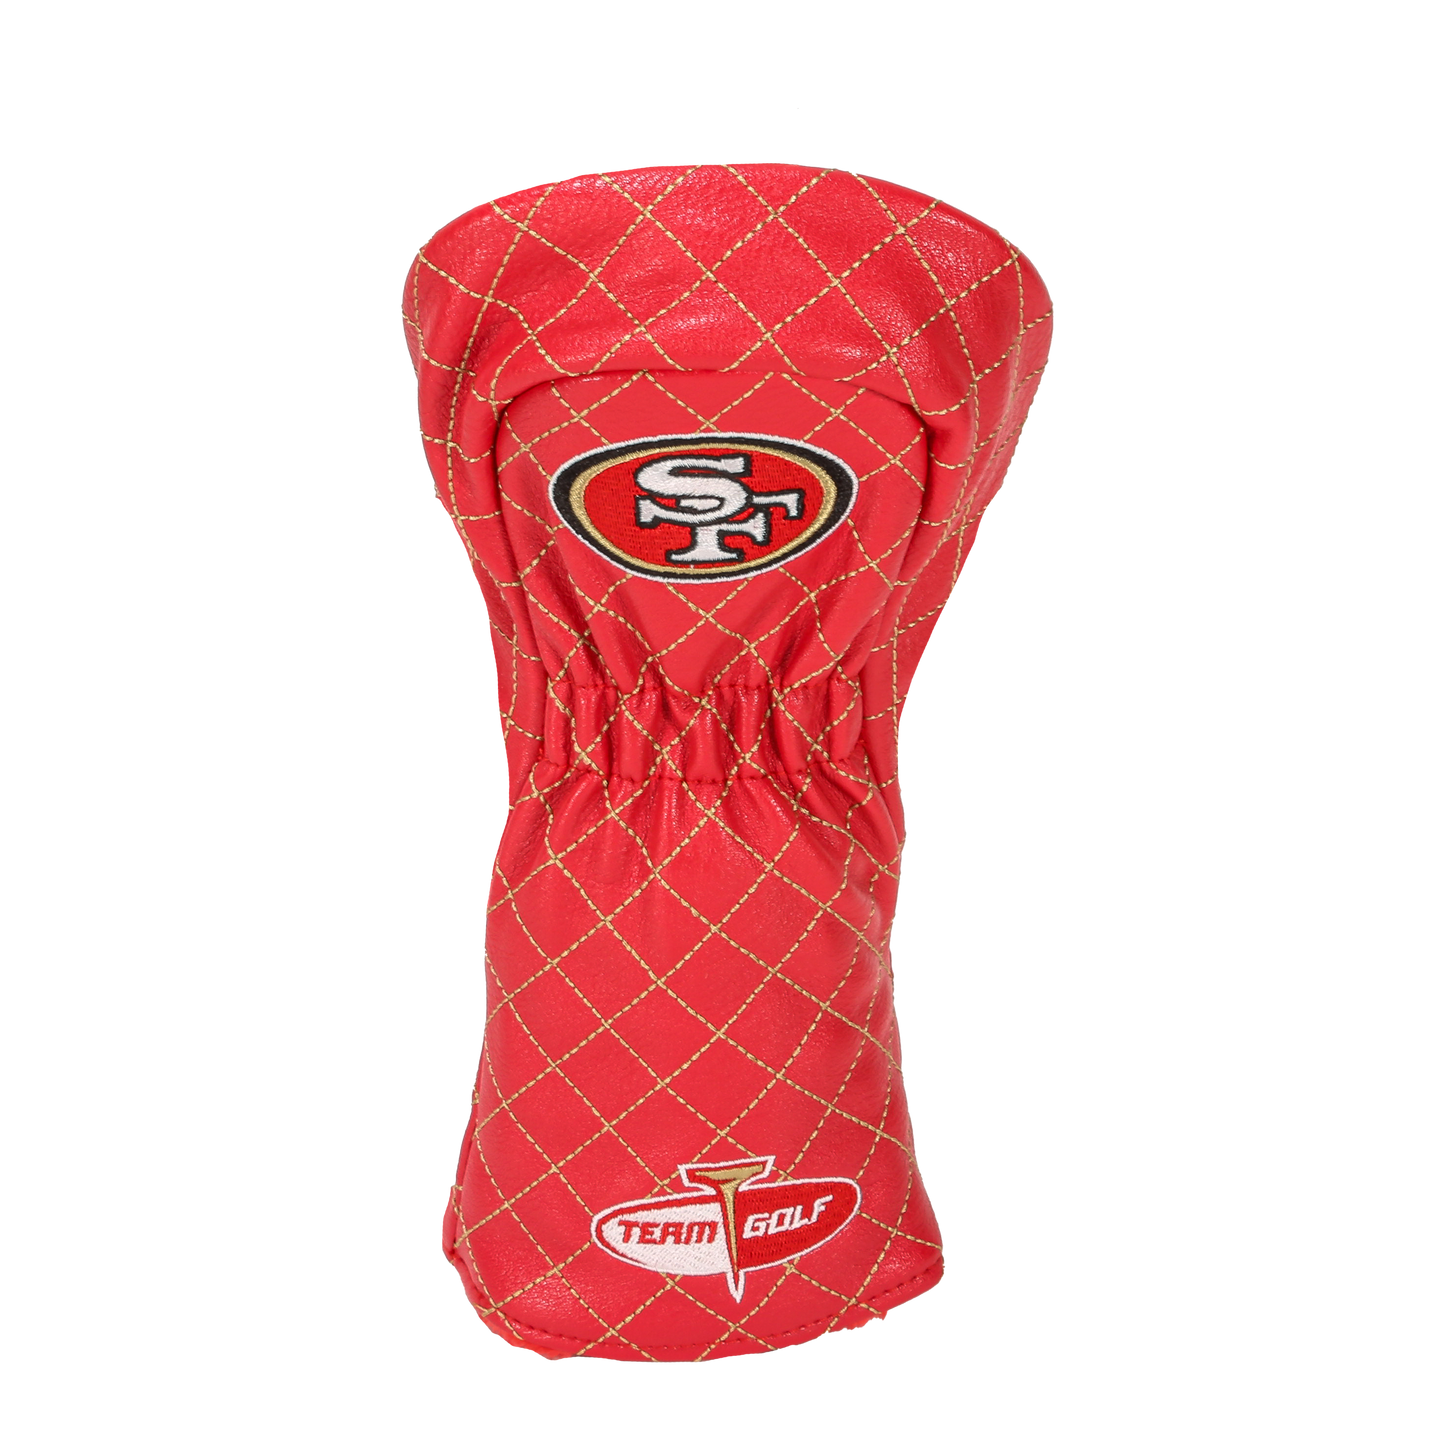 San Francisco "49ers" Fairway Cover